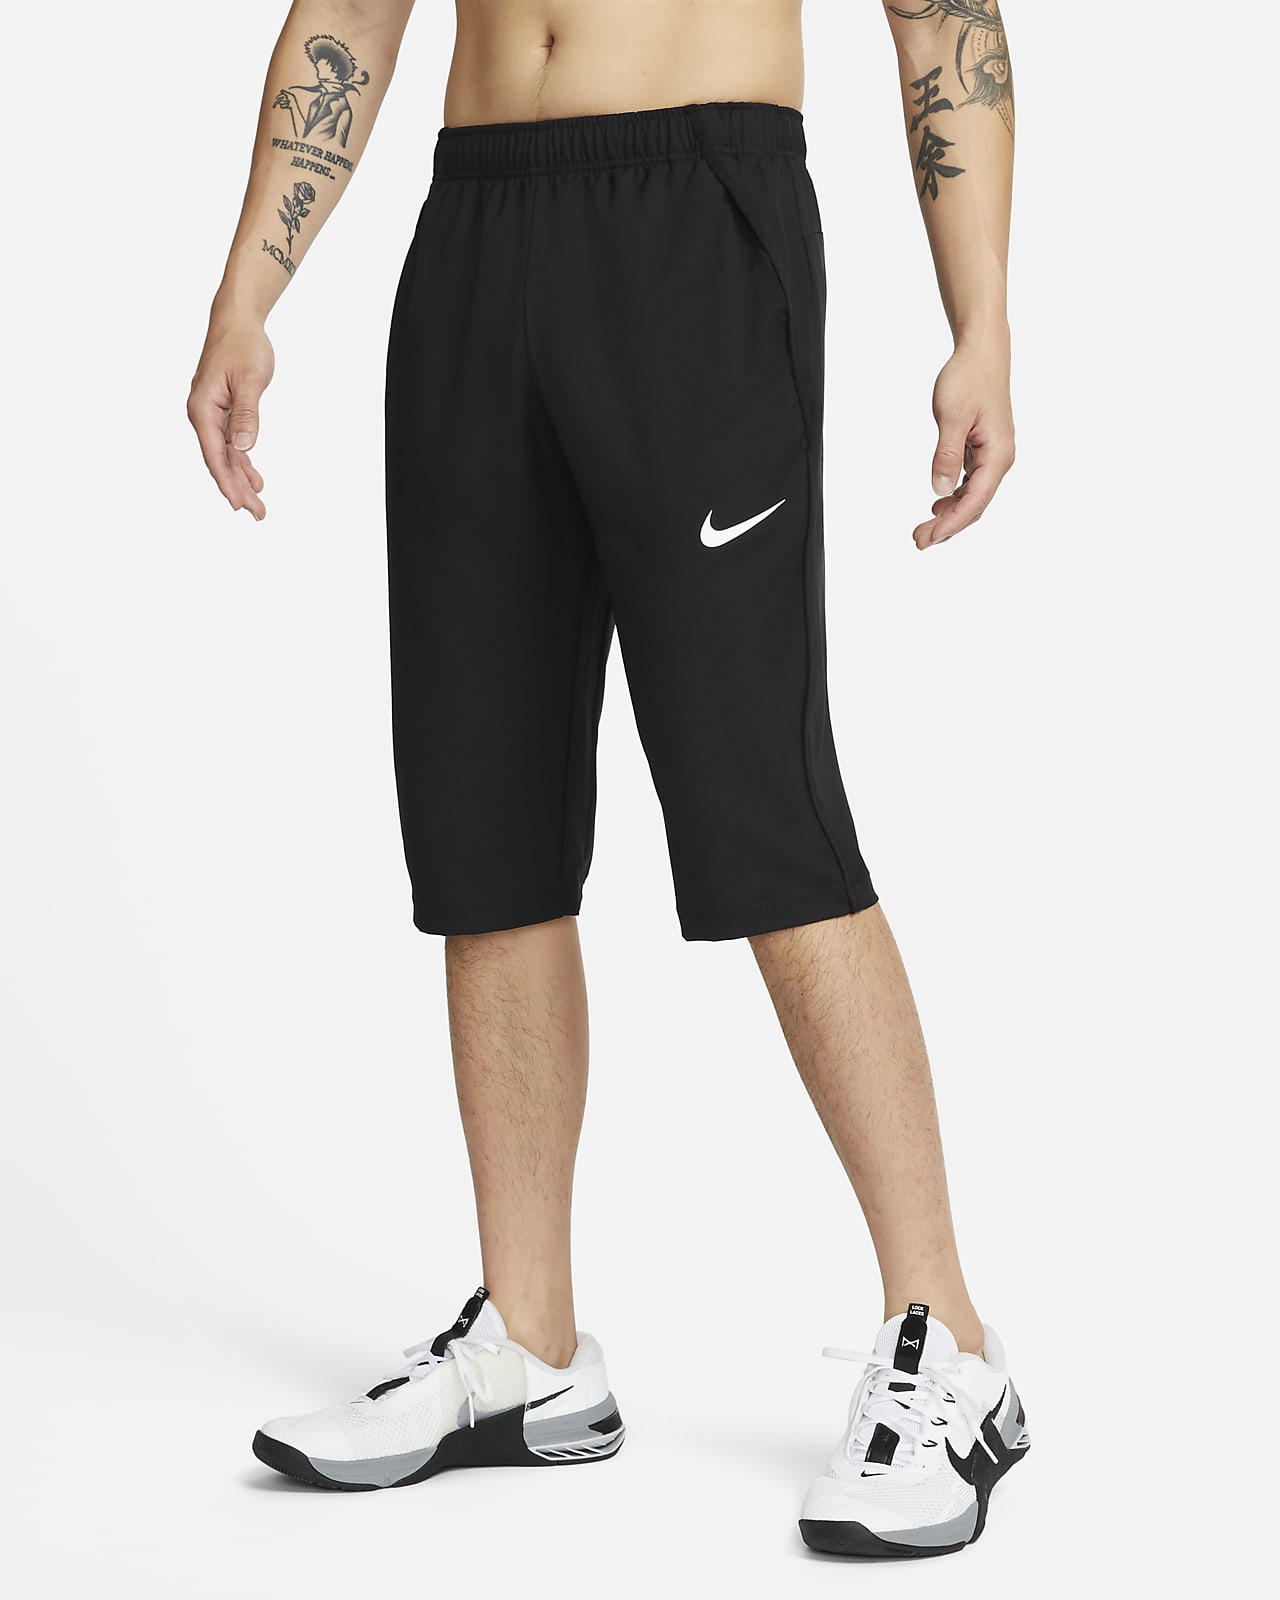 Nike Dri-FIT Men's 3/4 Woven Team Training Trousers